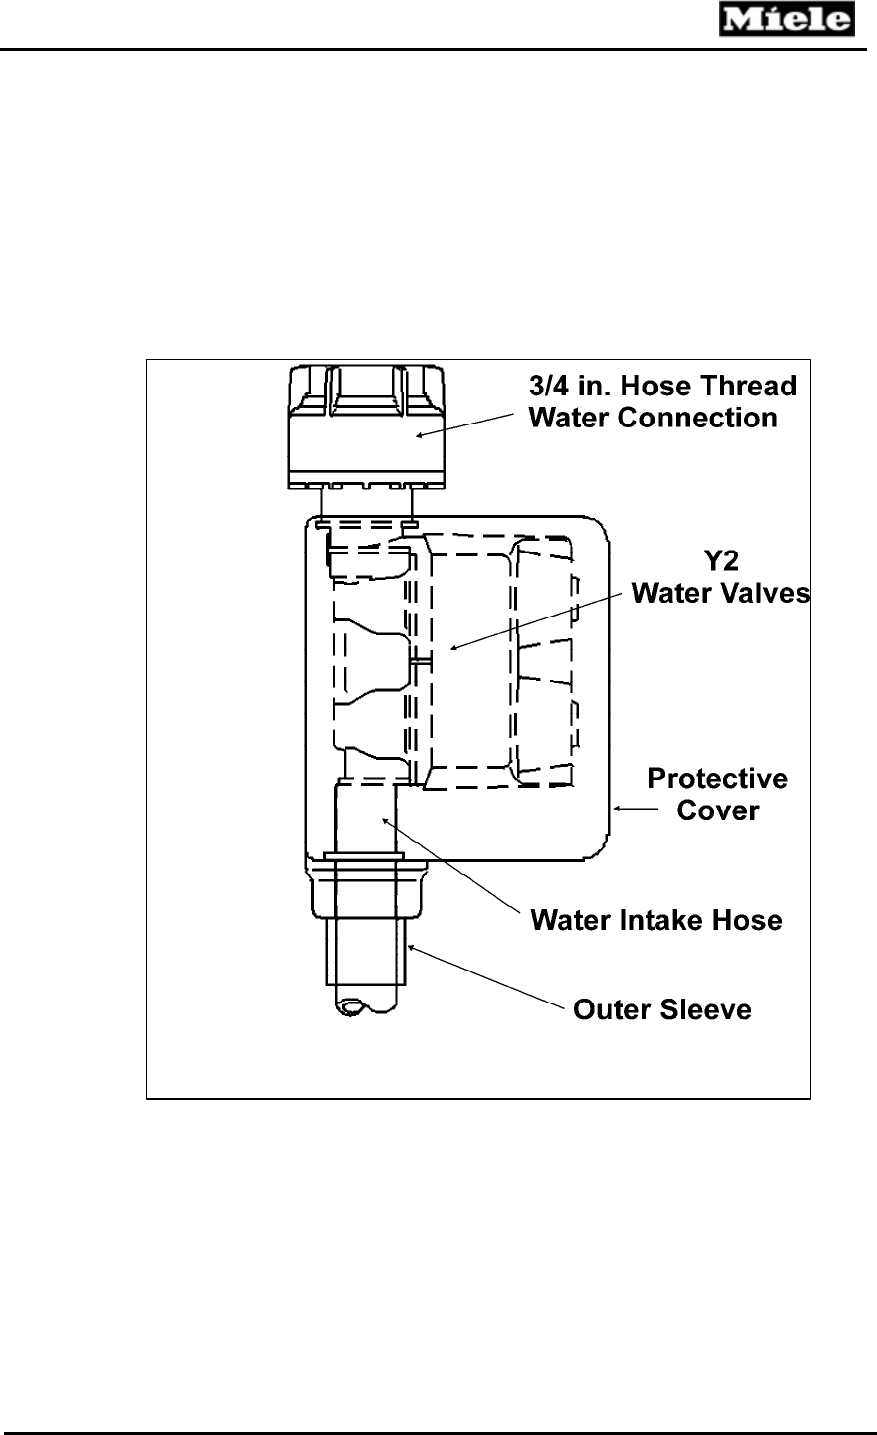 Miele Dishwasher G600 Users Manual 1  Miele B3 4 Water Flow Meter Wiring Diagram    UserManual.wiki